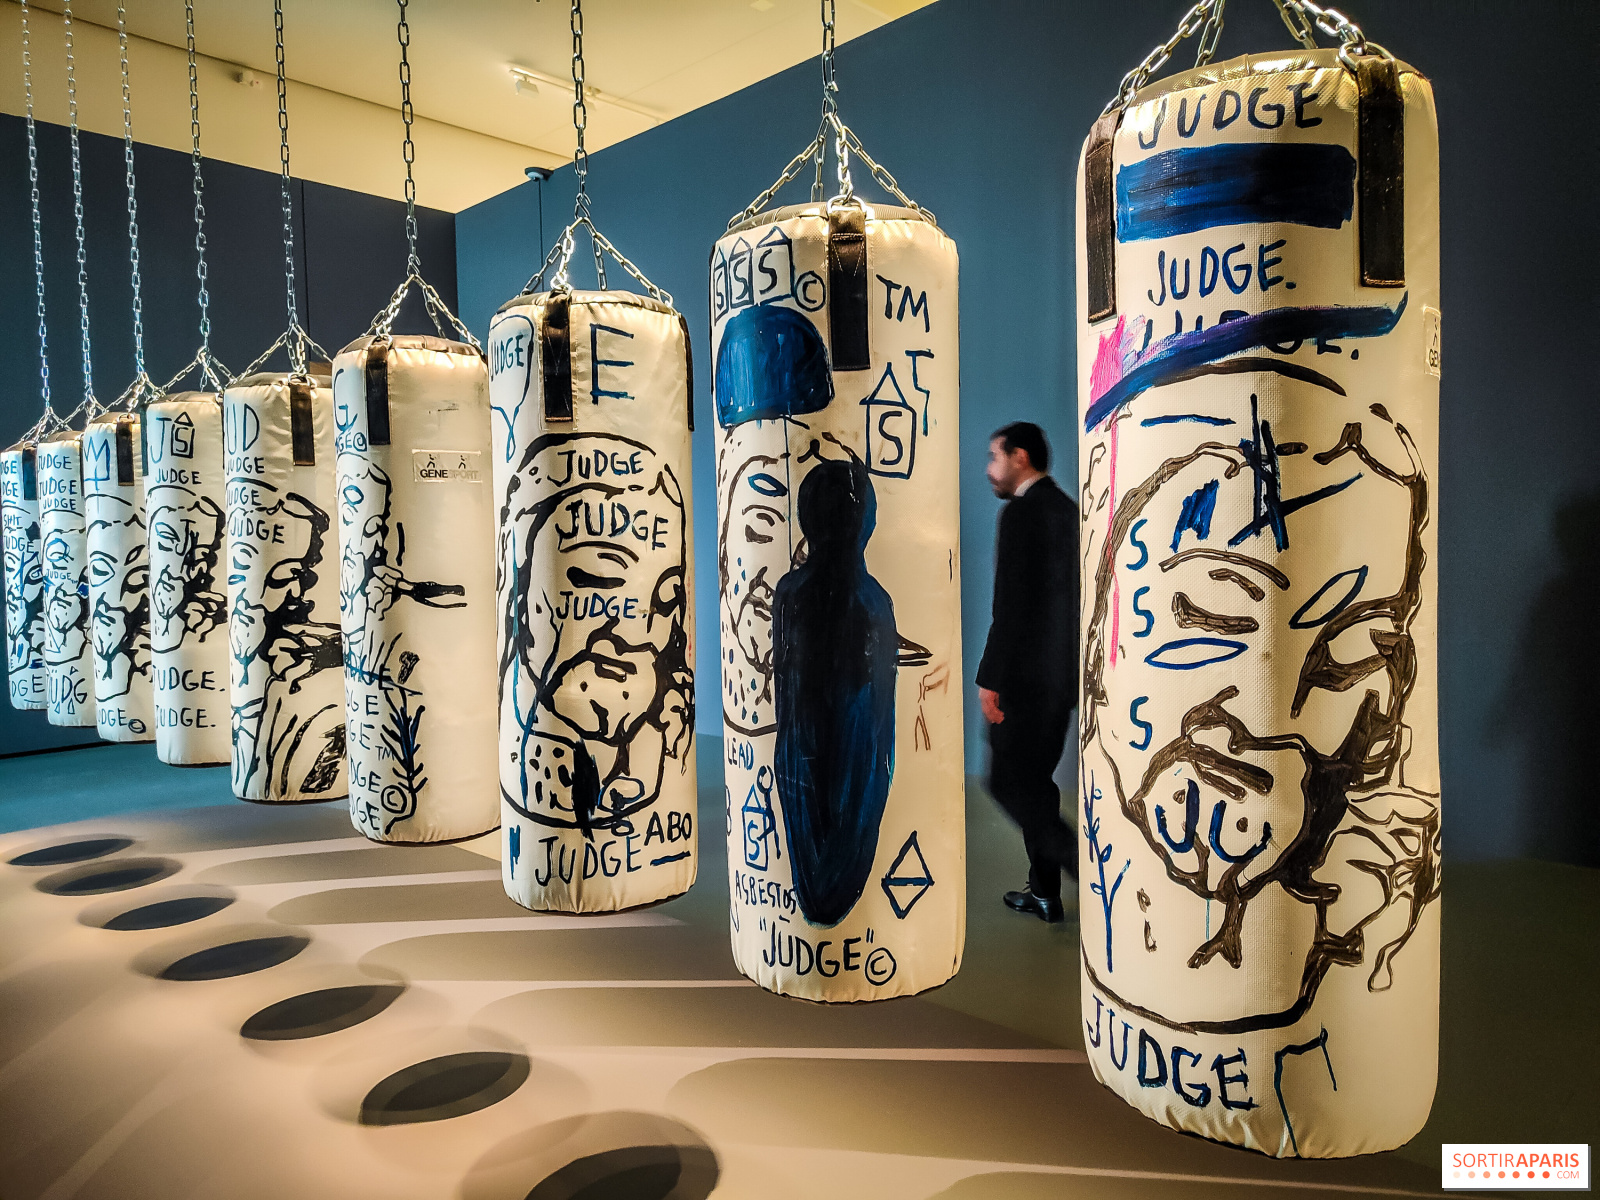 Basquiat x Warhol exhibition at the Louis Vuitton foundation